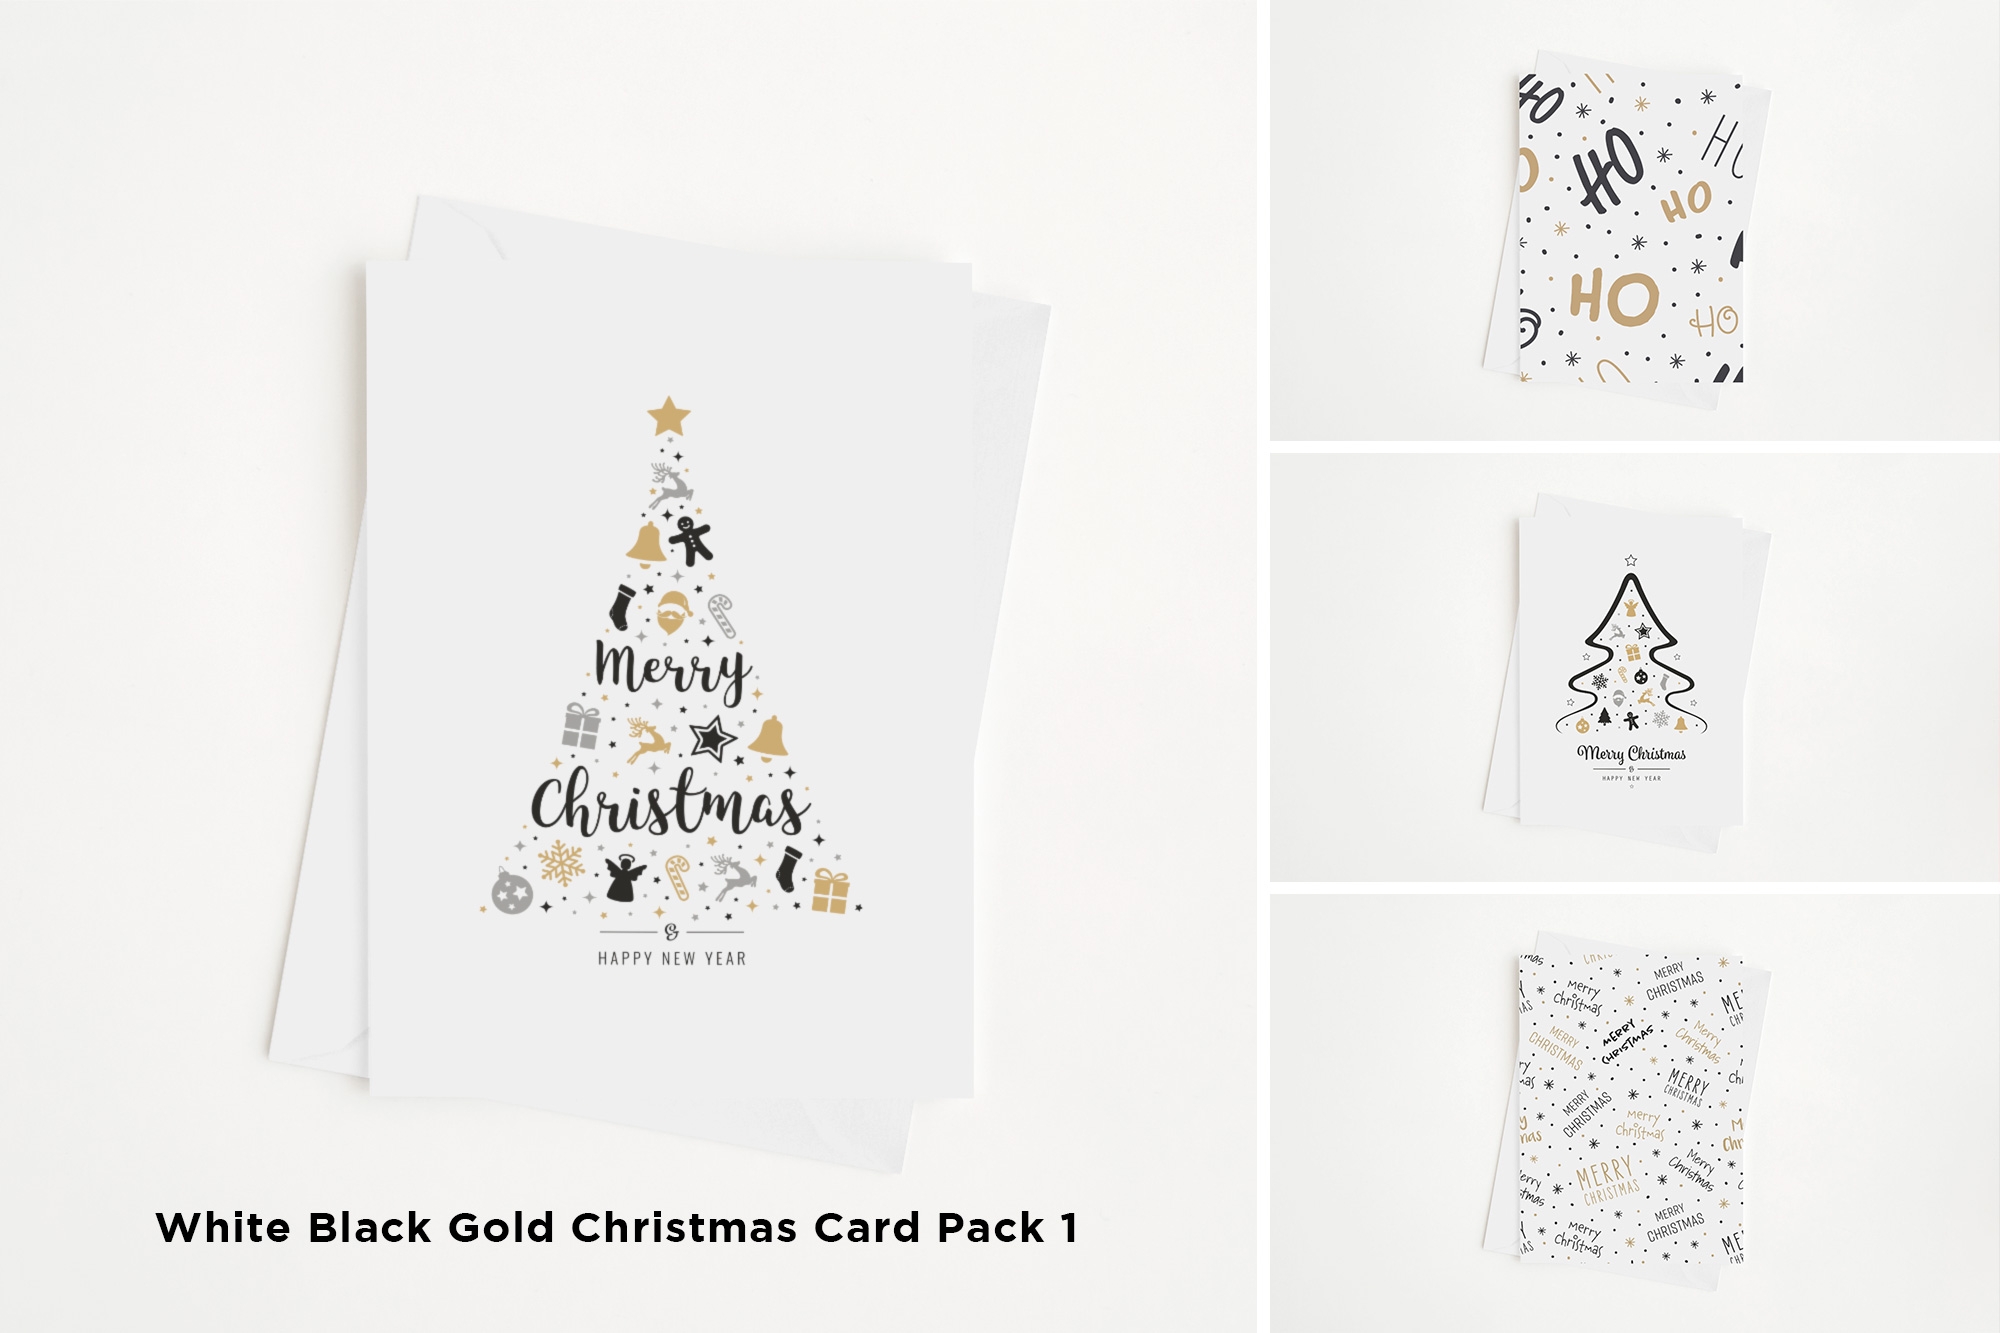 White Black Gold Christmas Card Pack 1 Mockup